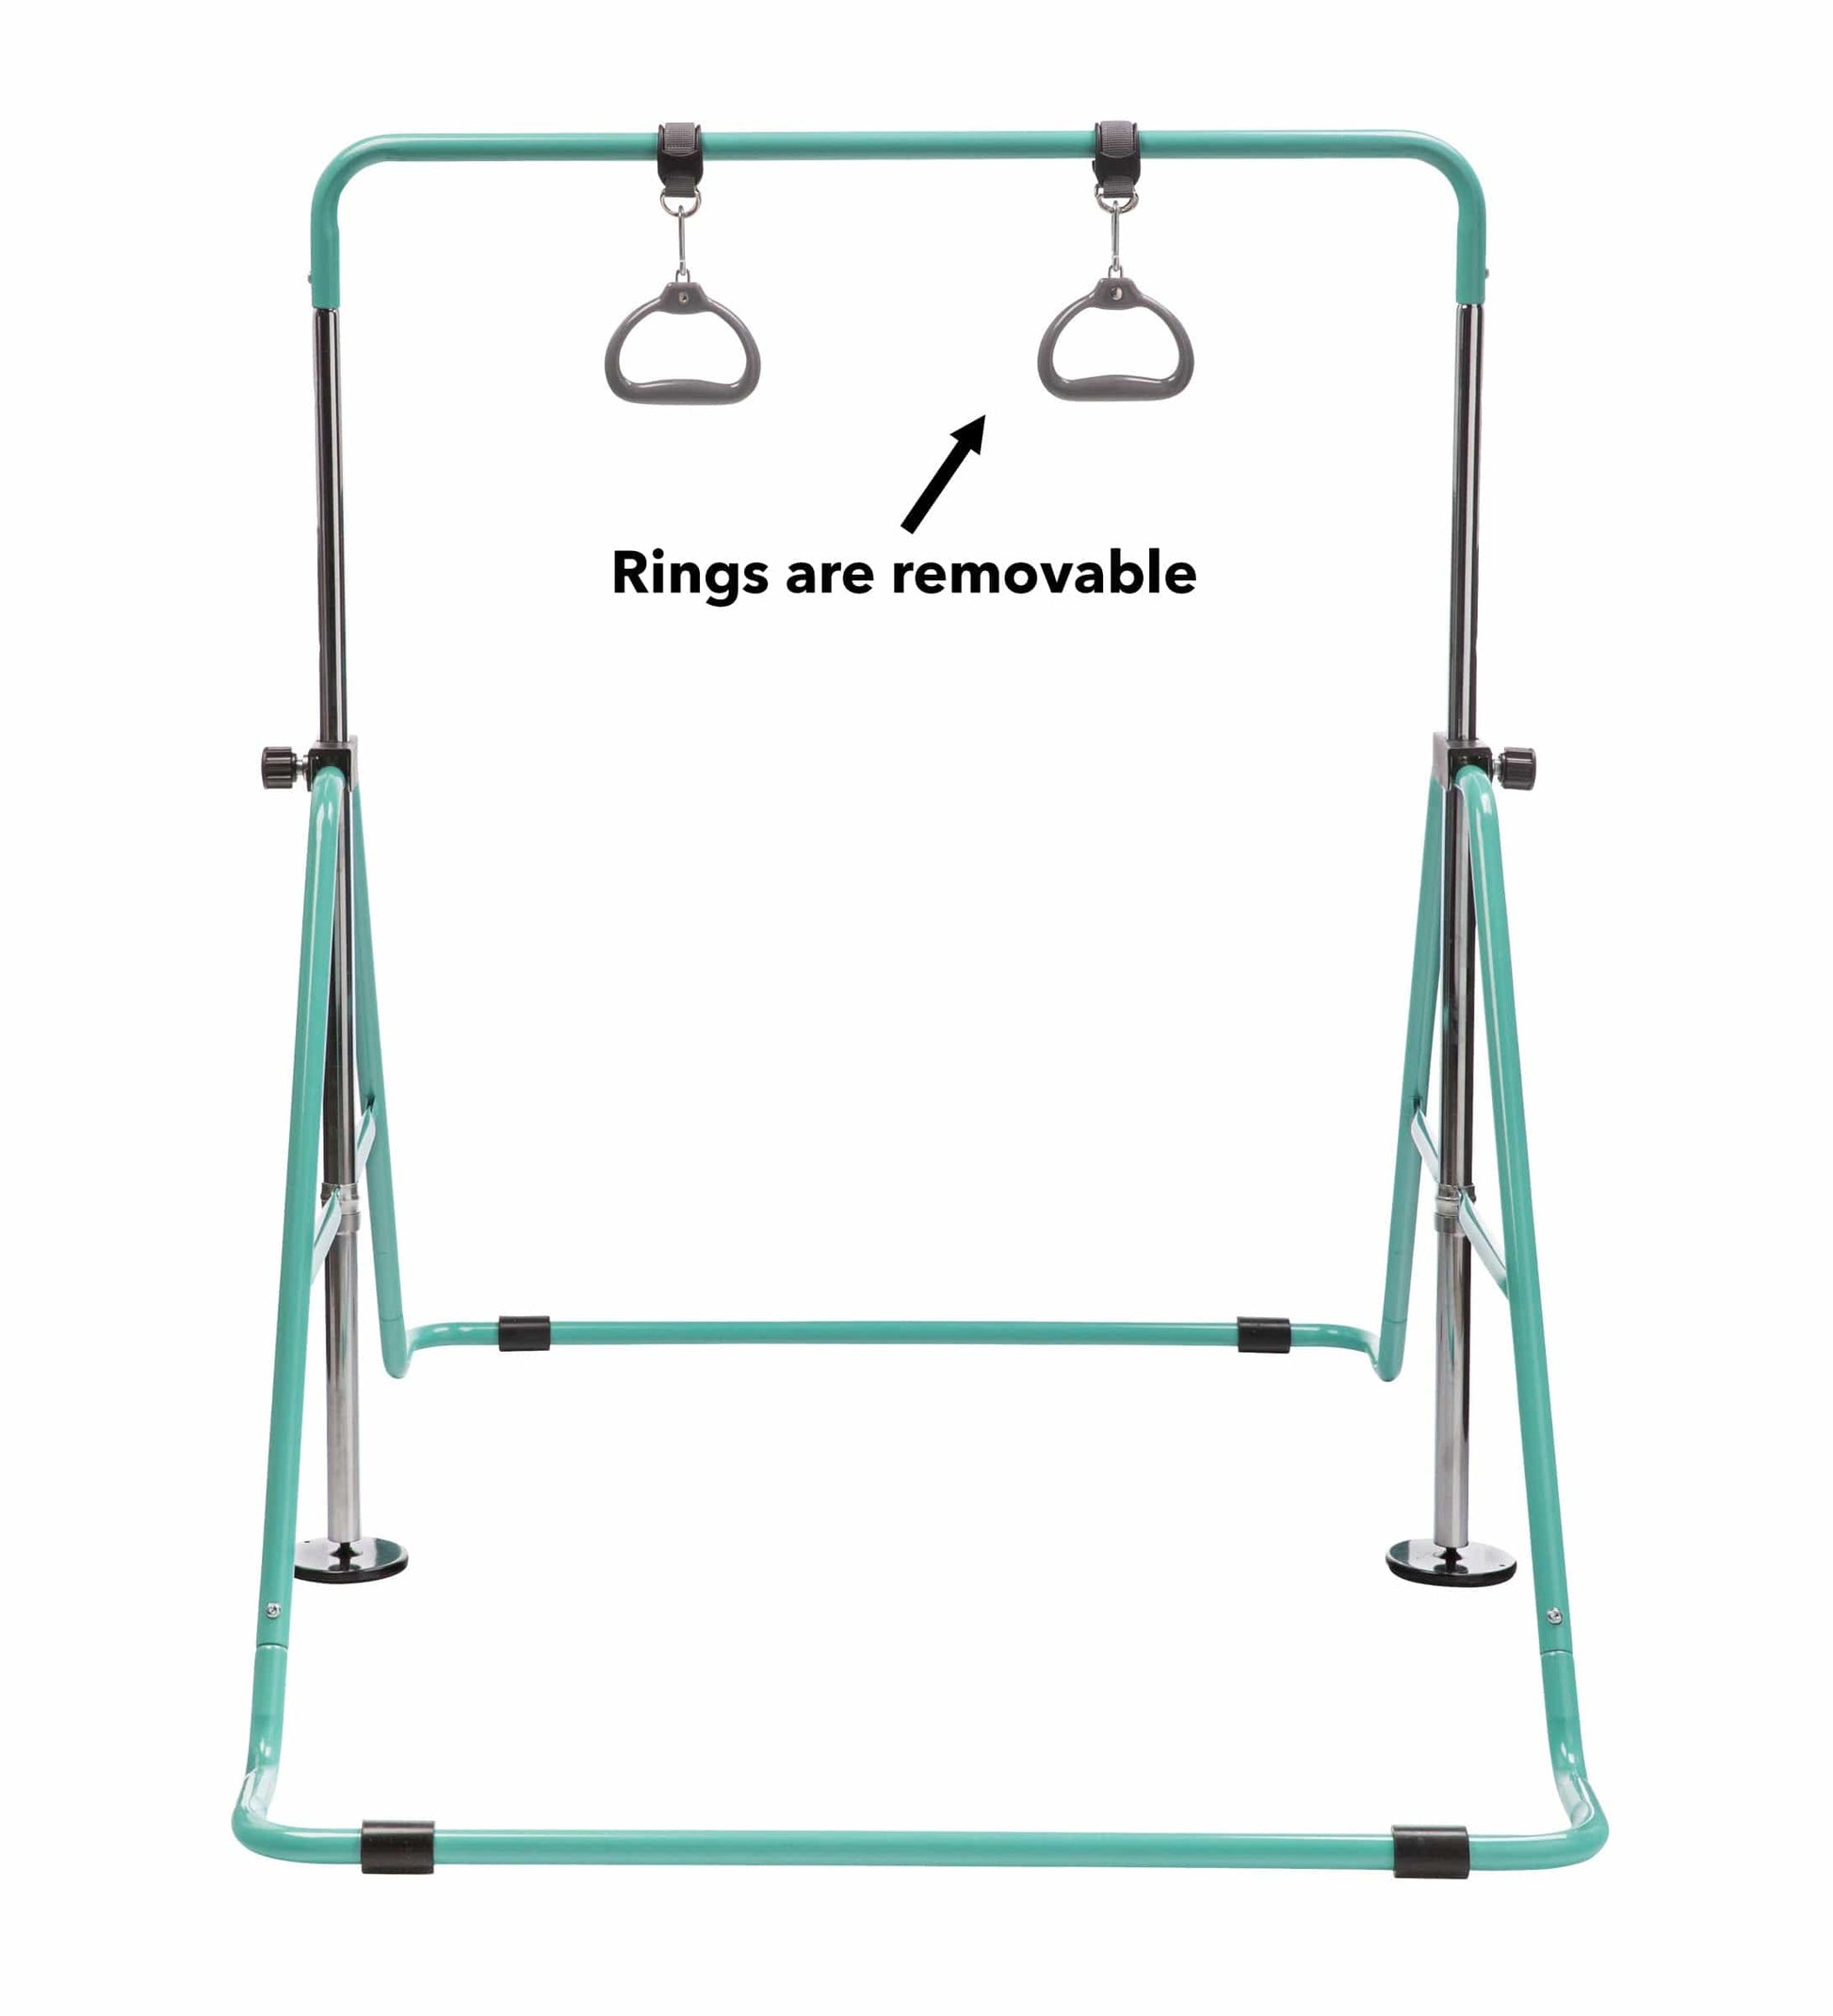 2-in-1 Adjustable Bar and Ring Gymnastics Set